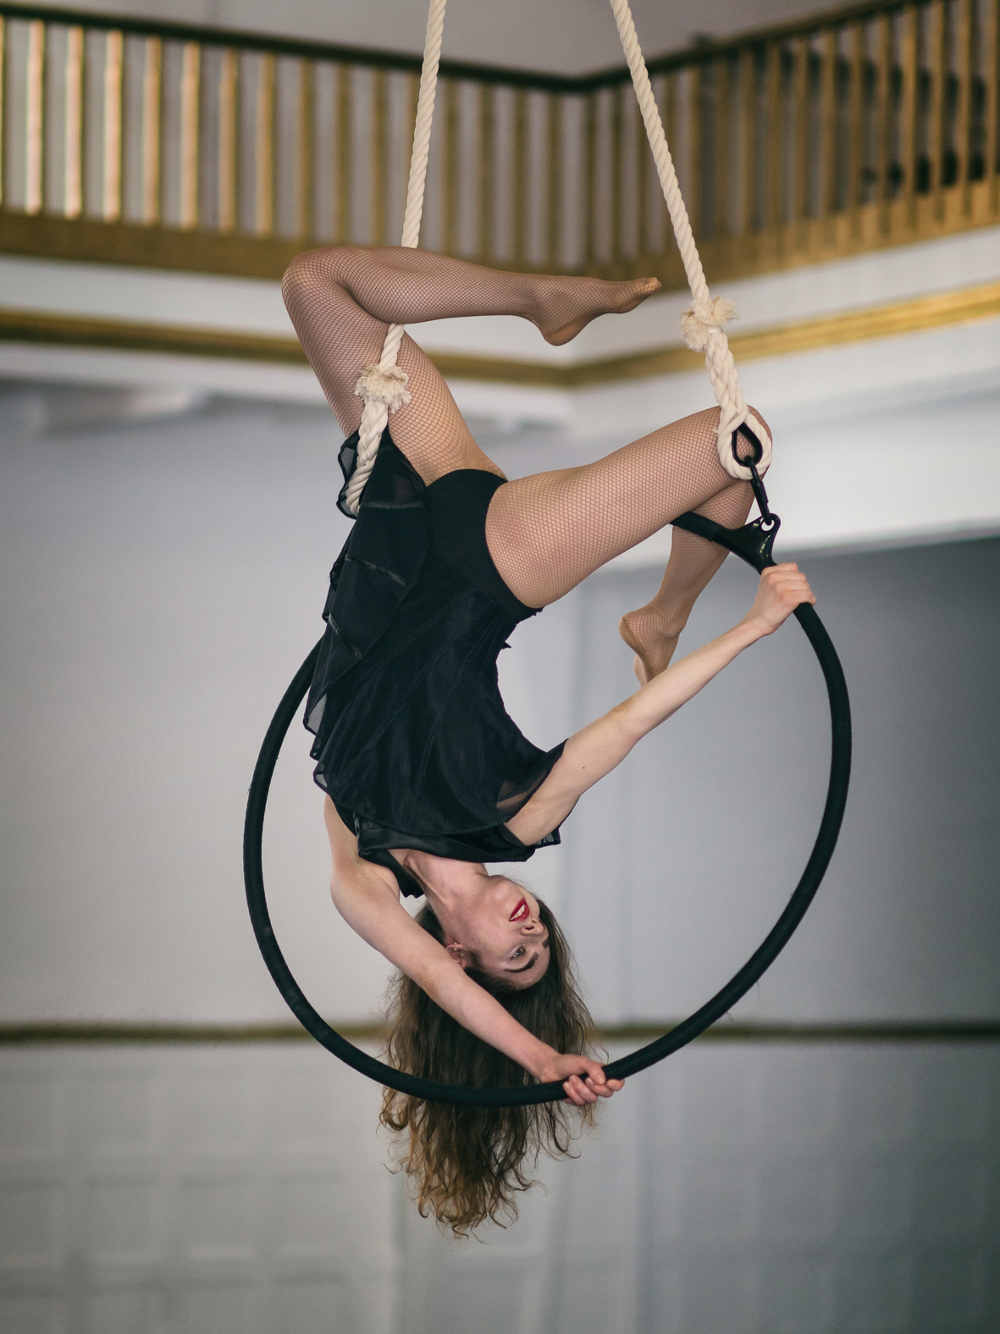 Elena-aerial-hoop-show